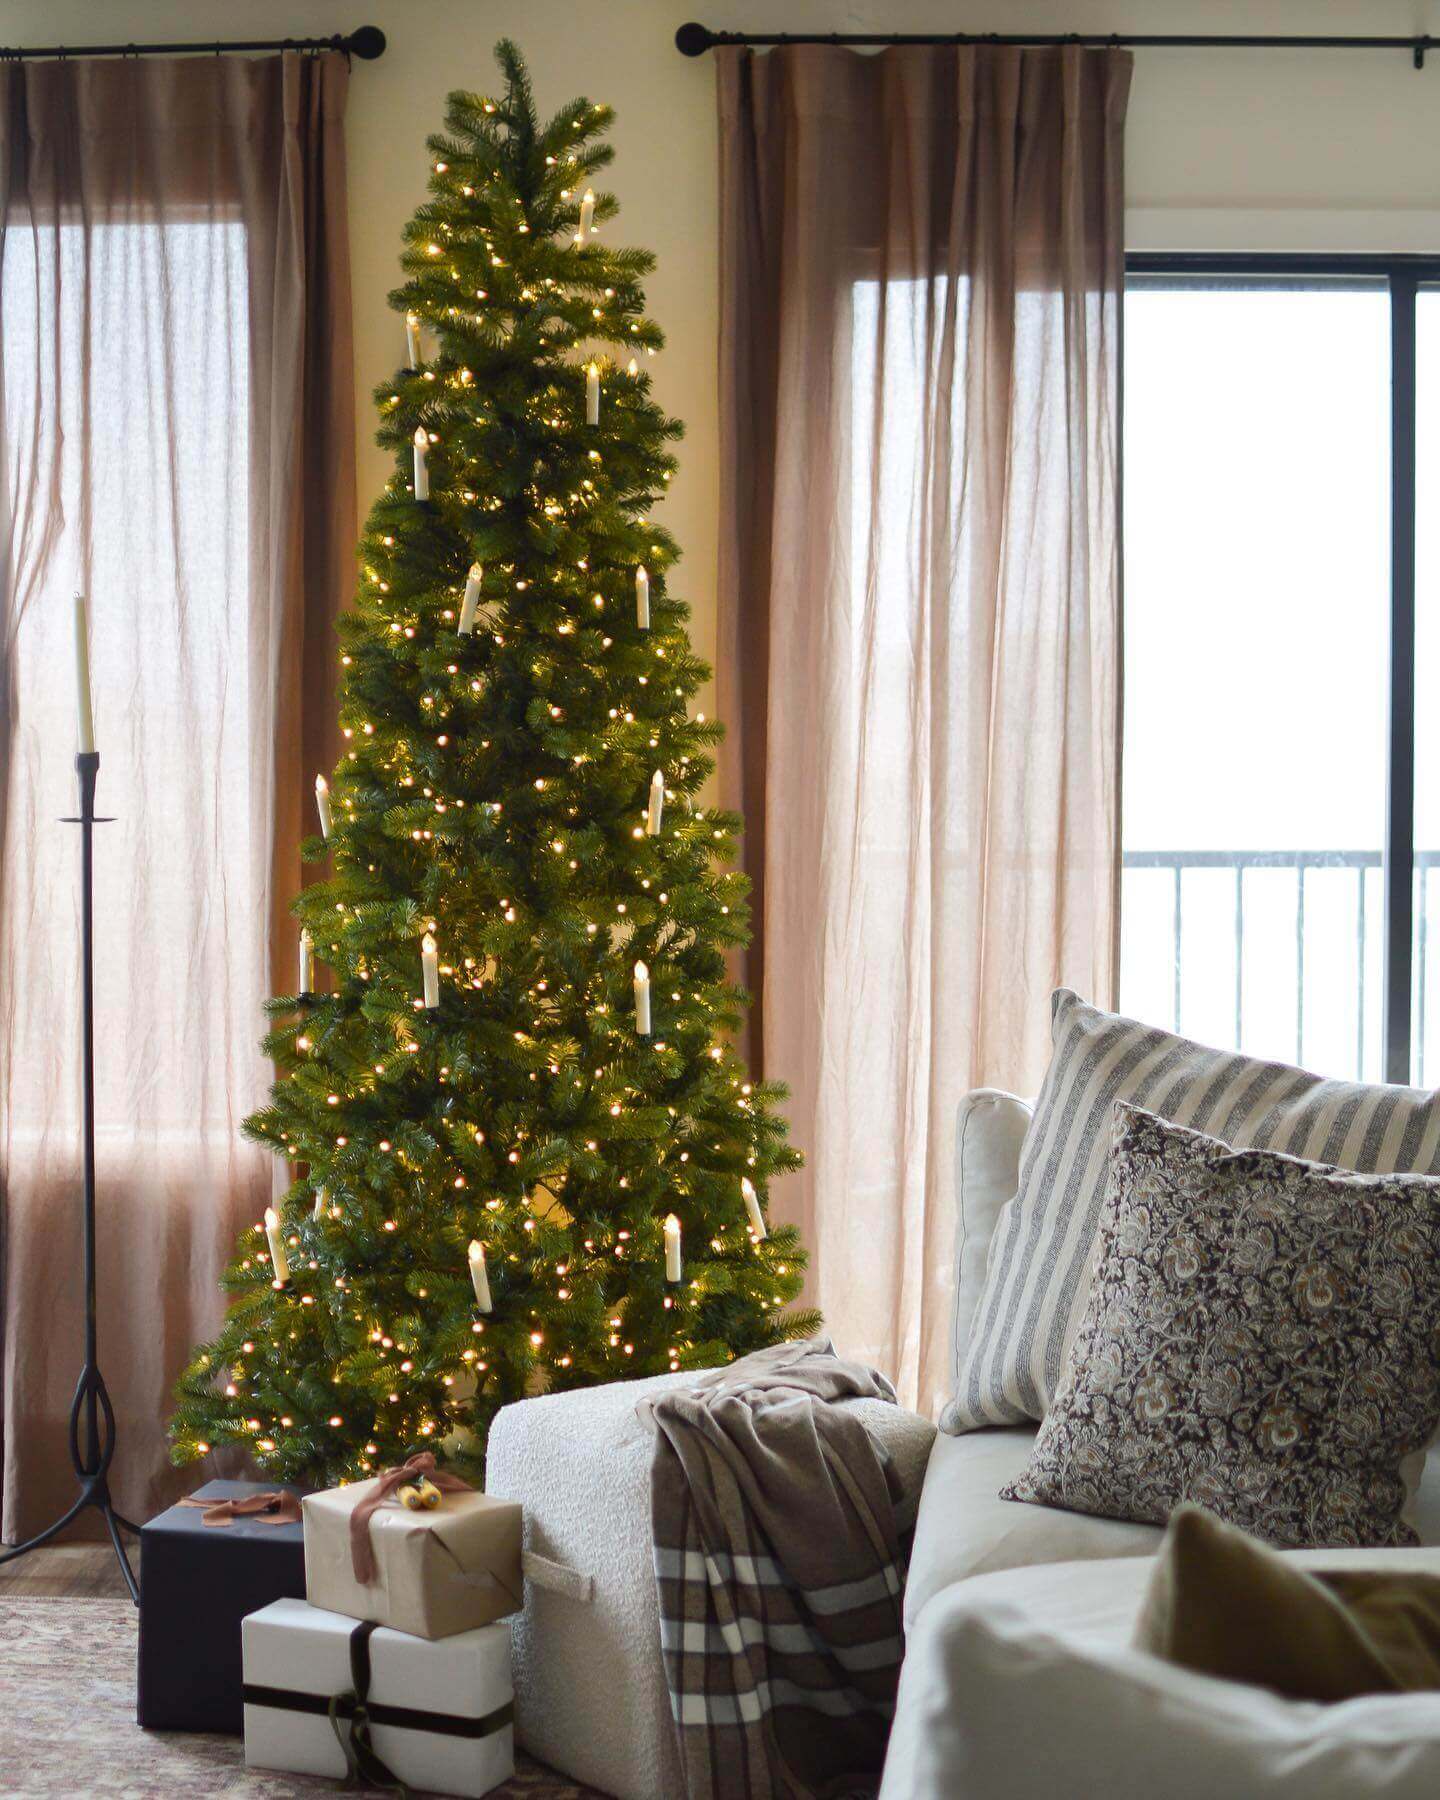 King of Christmas 12' King Douglas Fir Slim Quick-Shape Artificial Christmas Tree Unlit